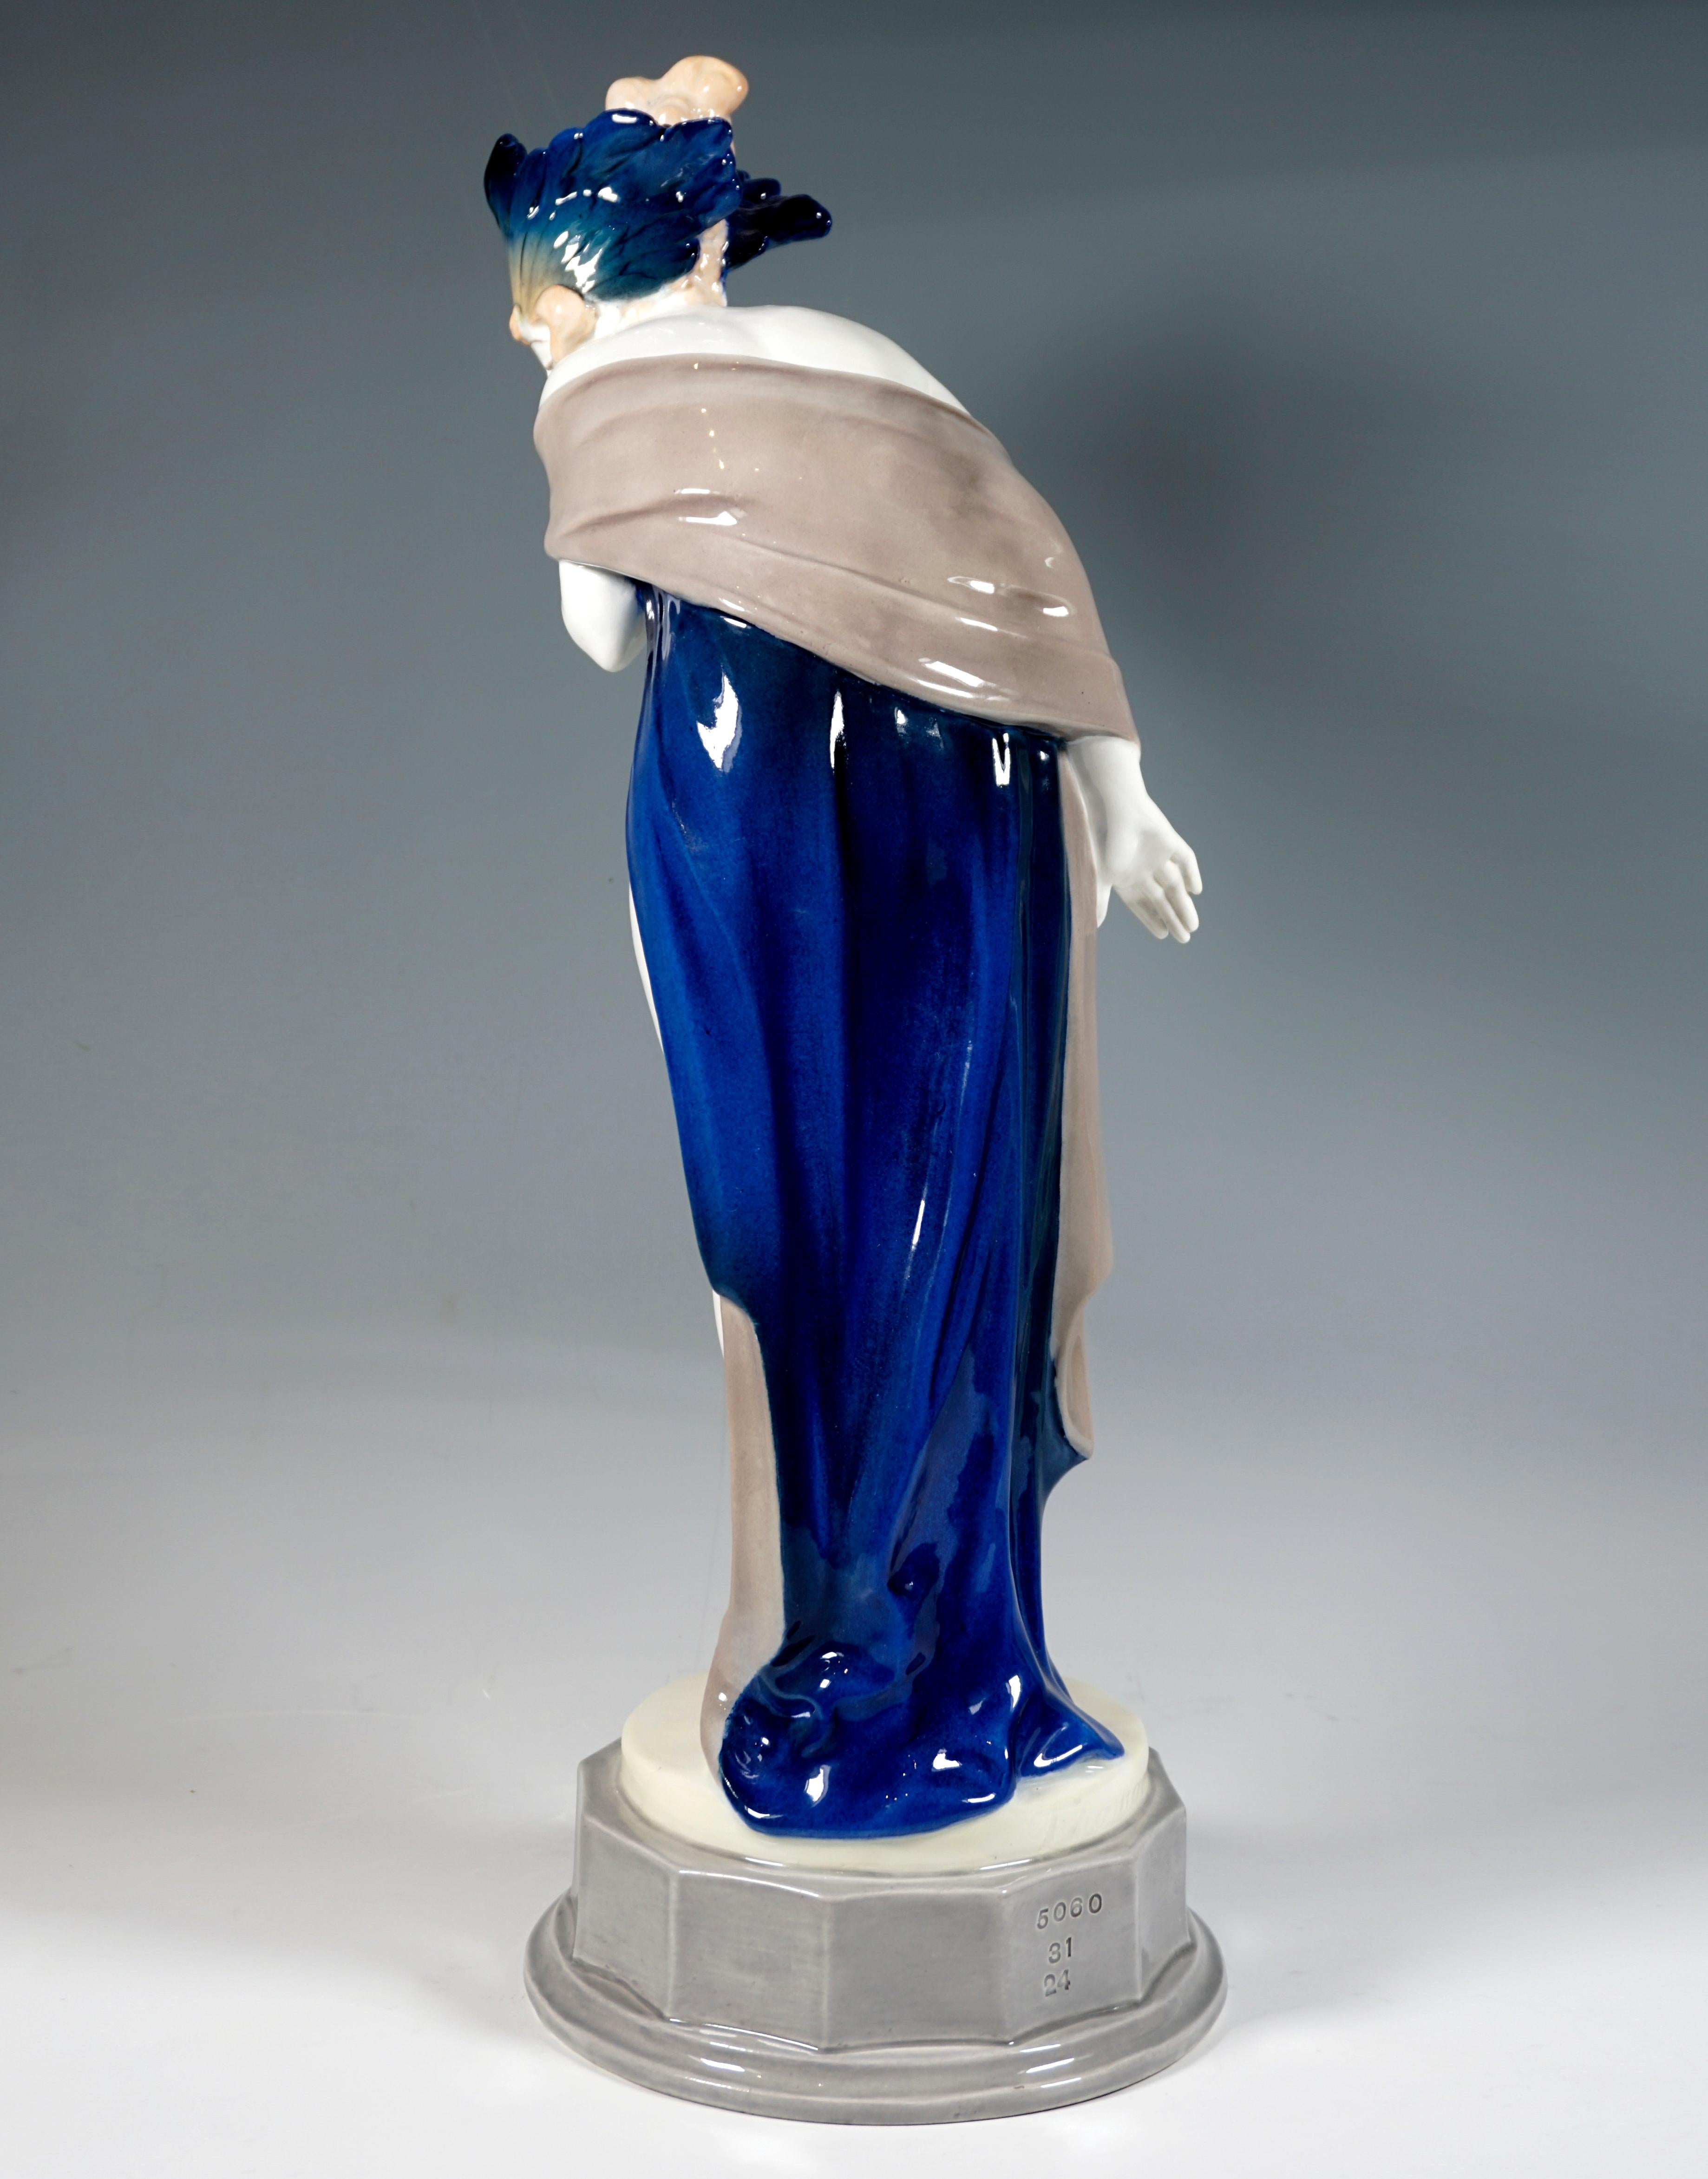 Hand-Crafted Goldscheider Art Déco Figure 'Fascination', Dancer with Headdress by W. Thomasch For Sale